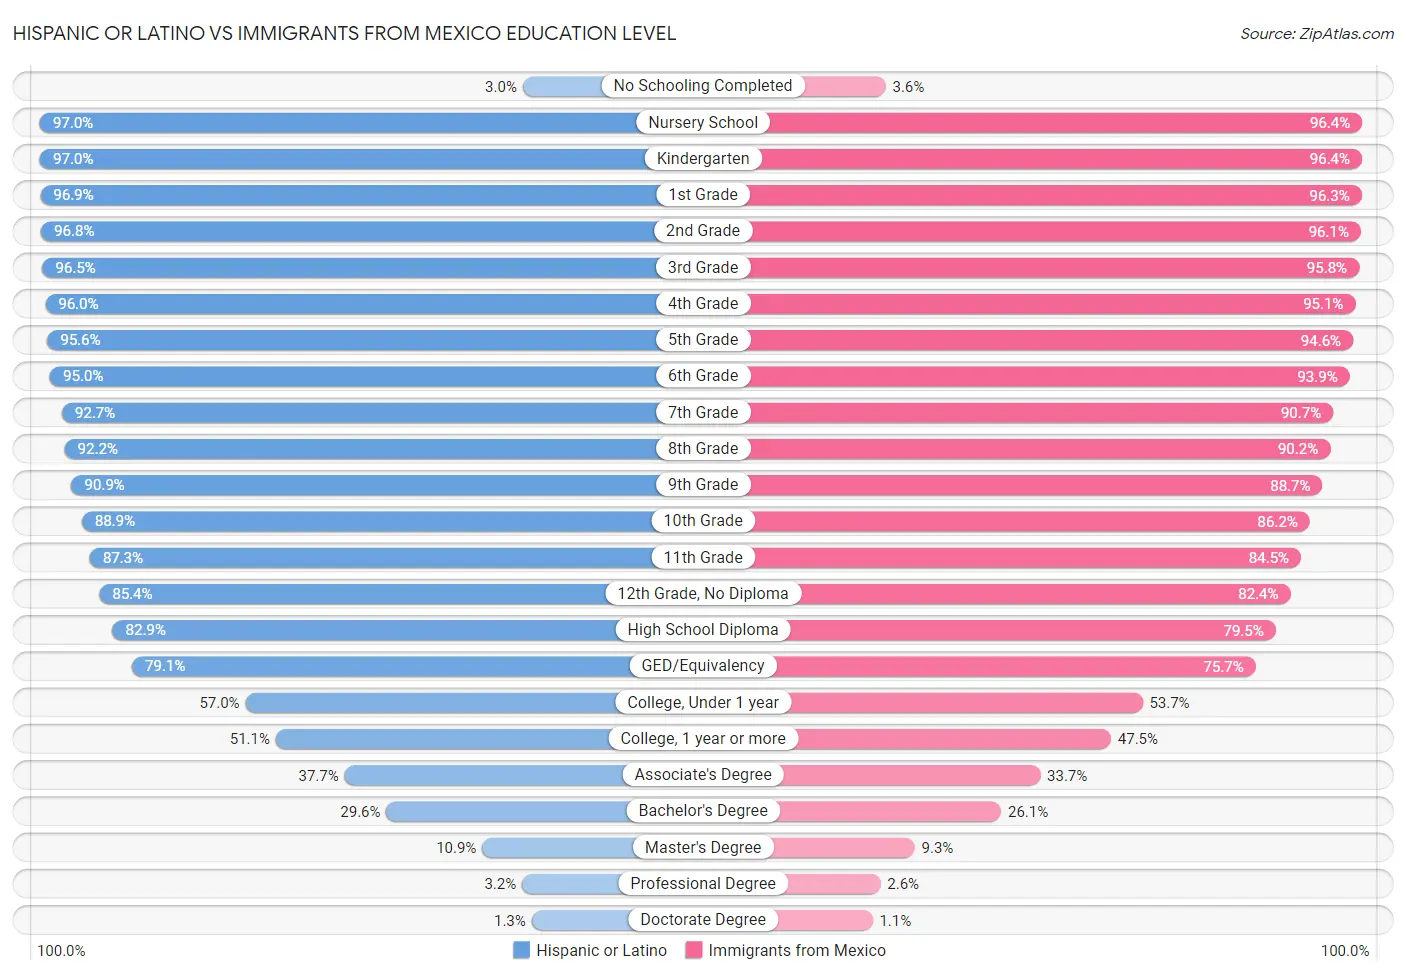 Hispanic or Latino vs Immigrants from Mexico Education Level